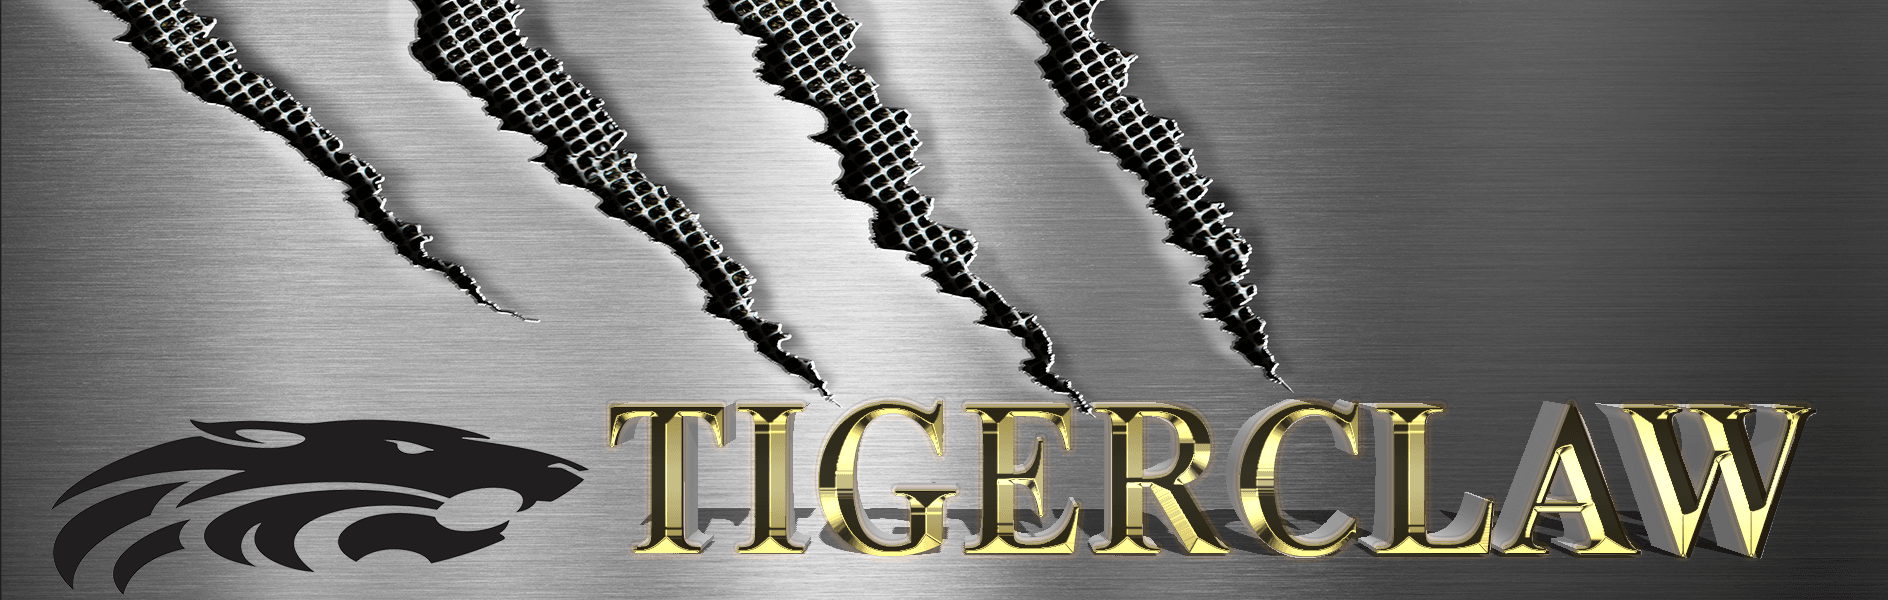 TIGER-CLAW 横幅